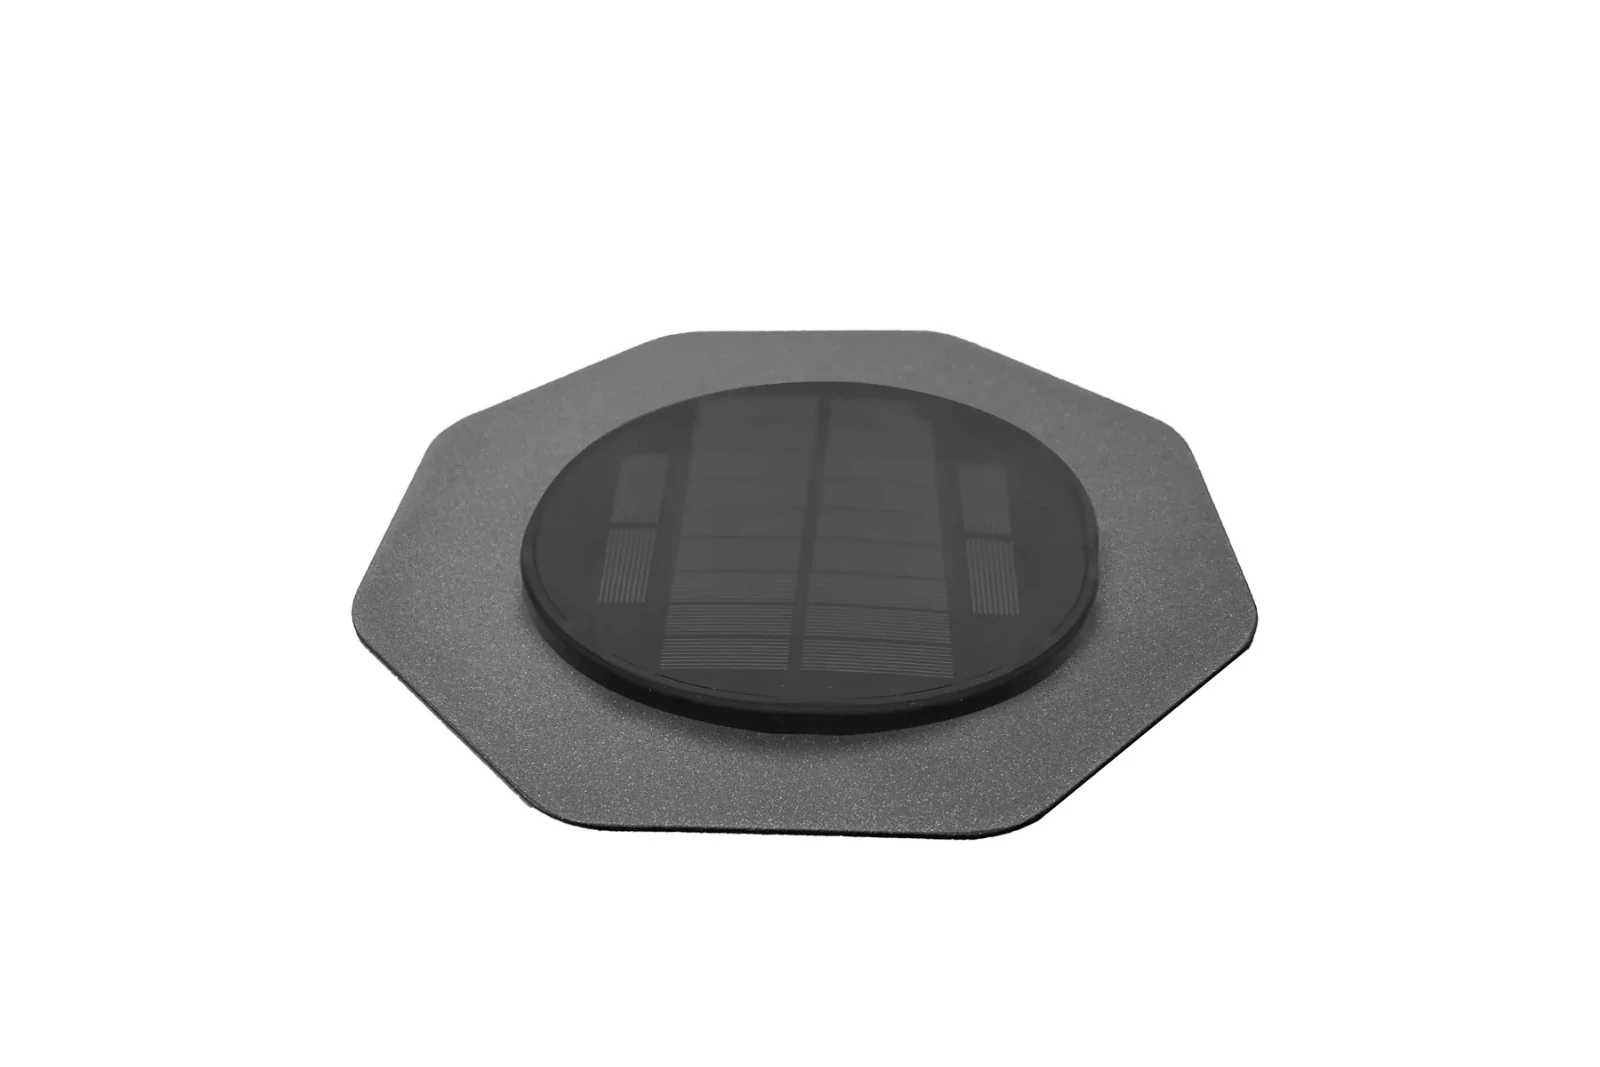 Deckel & Solar LED-Lampe für Lightlux Laterne | lava grey